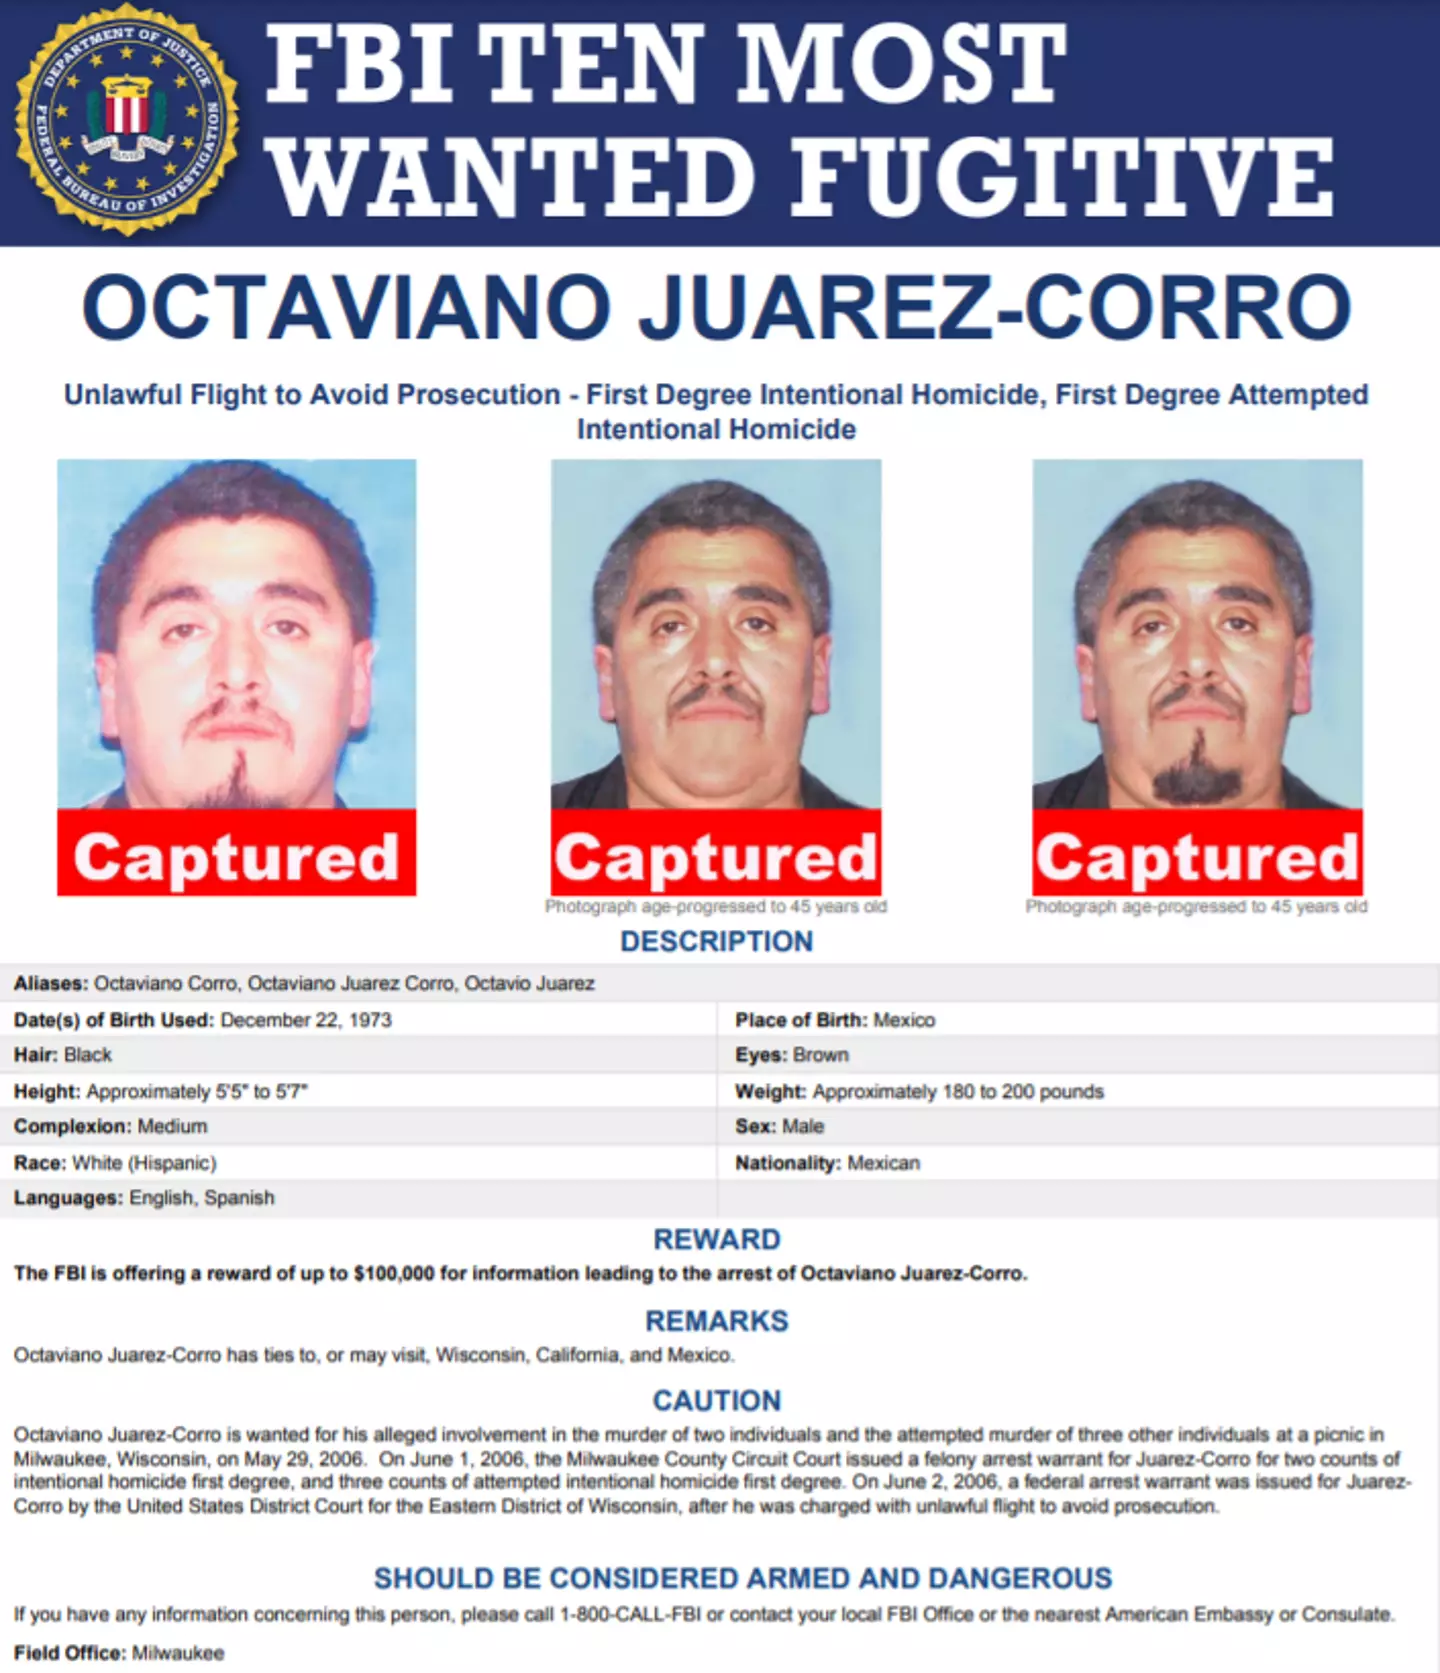 Octaviano Juarez-Corro's wanted poster. (FBI)